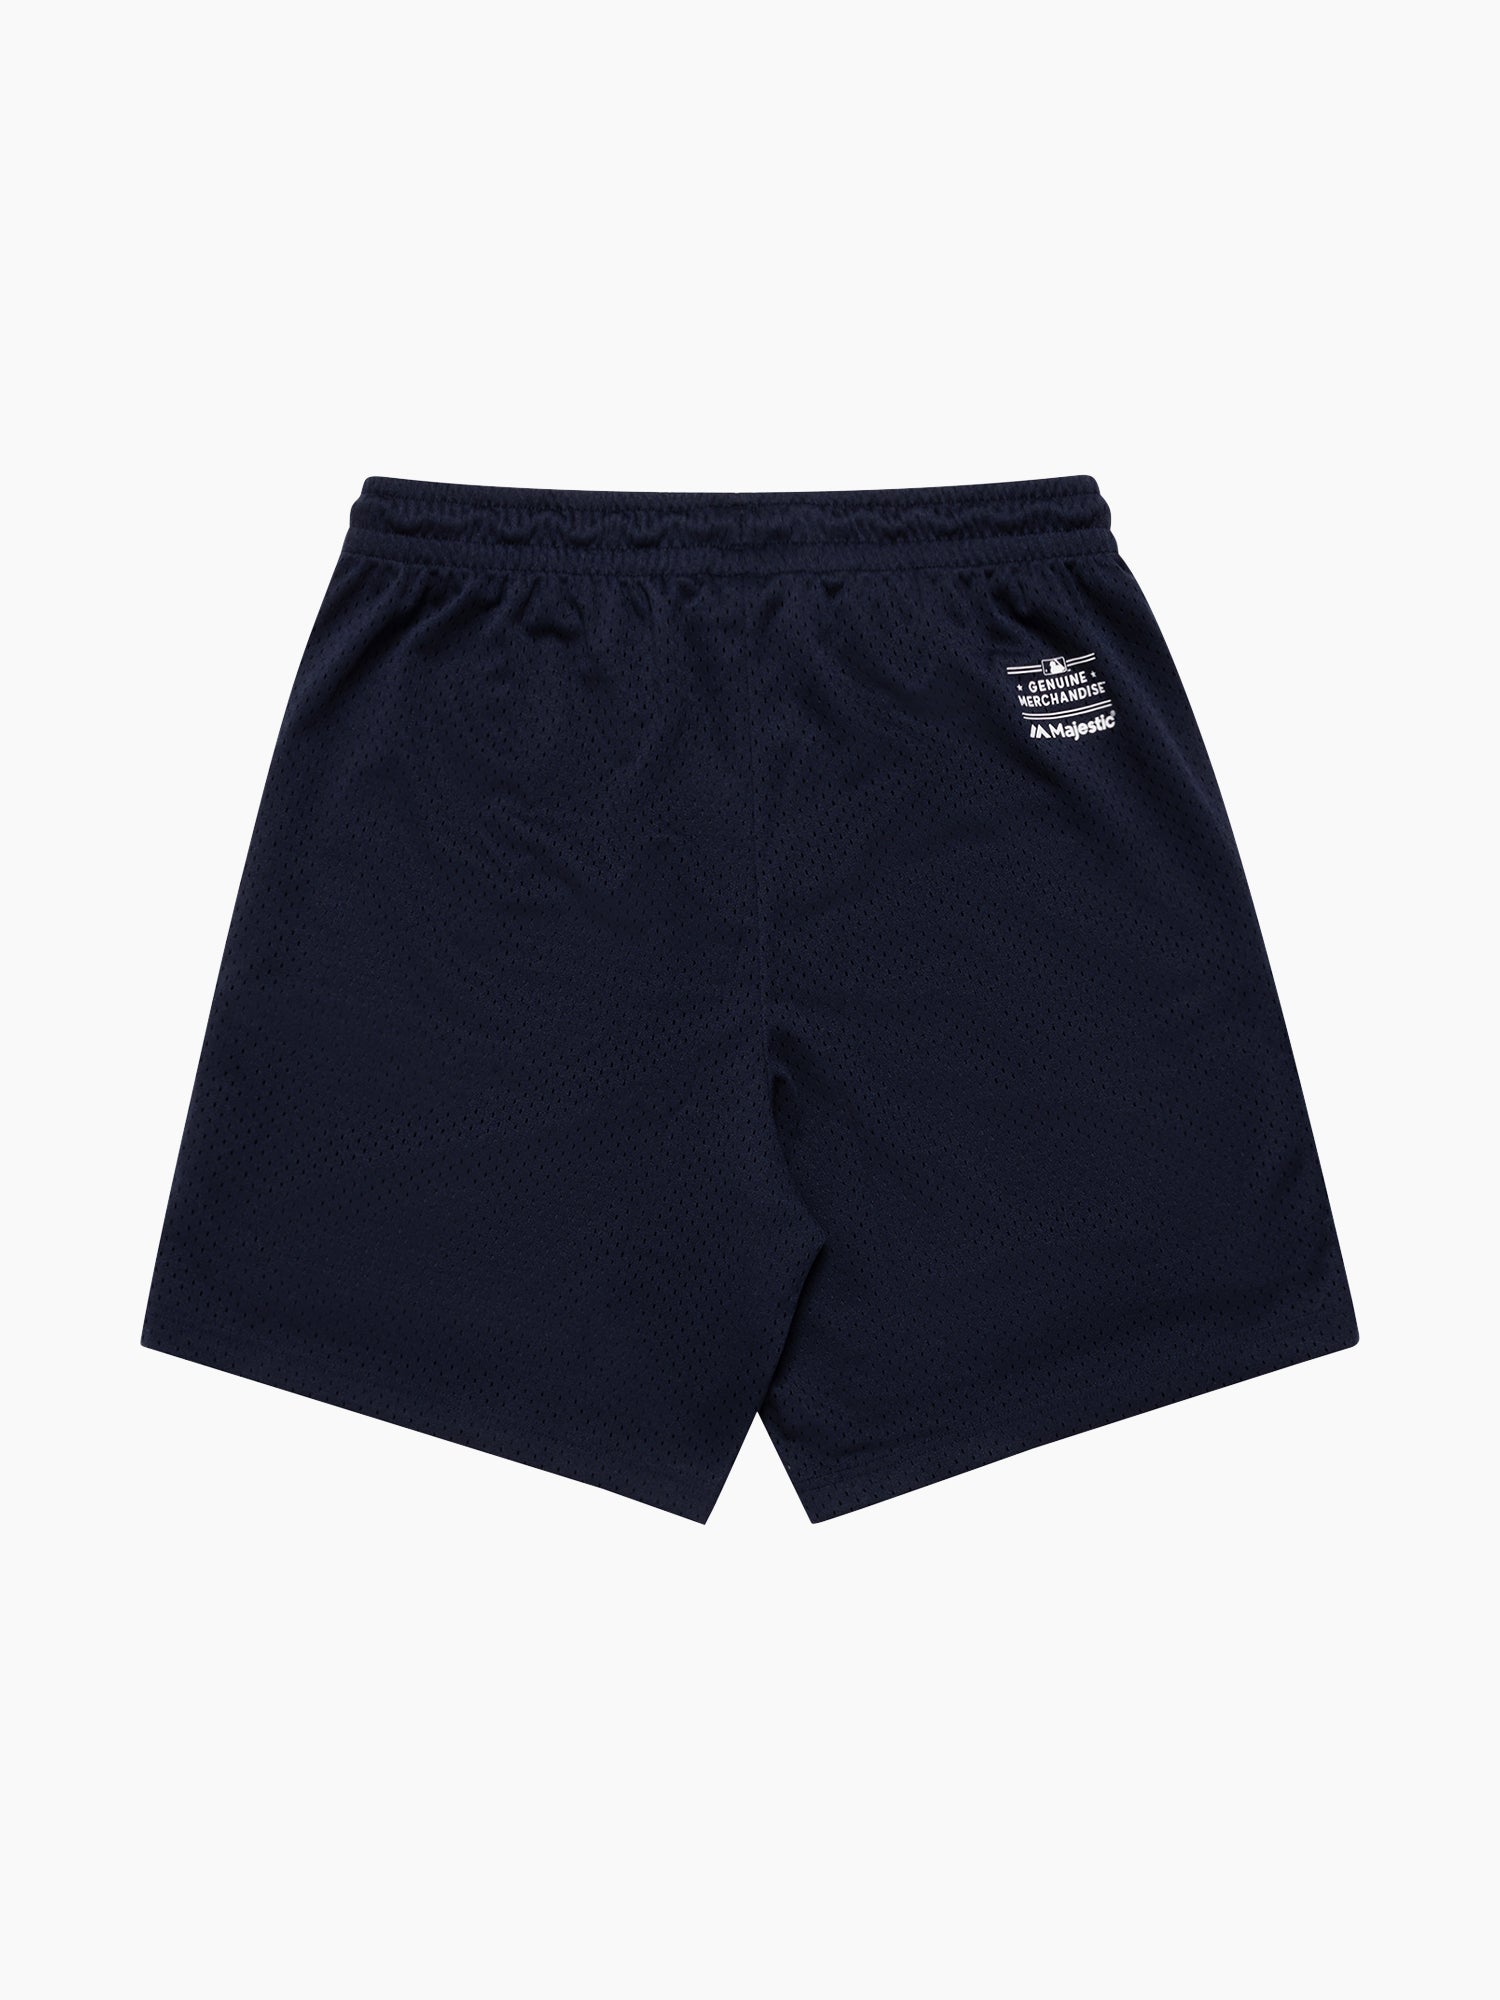 MJA-D12 (Majestic vintage sport mesh shorts new york yankees seaborn) 92395216